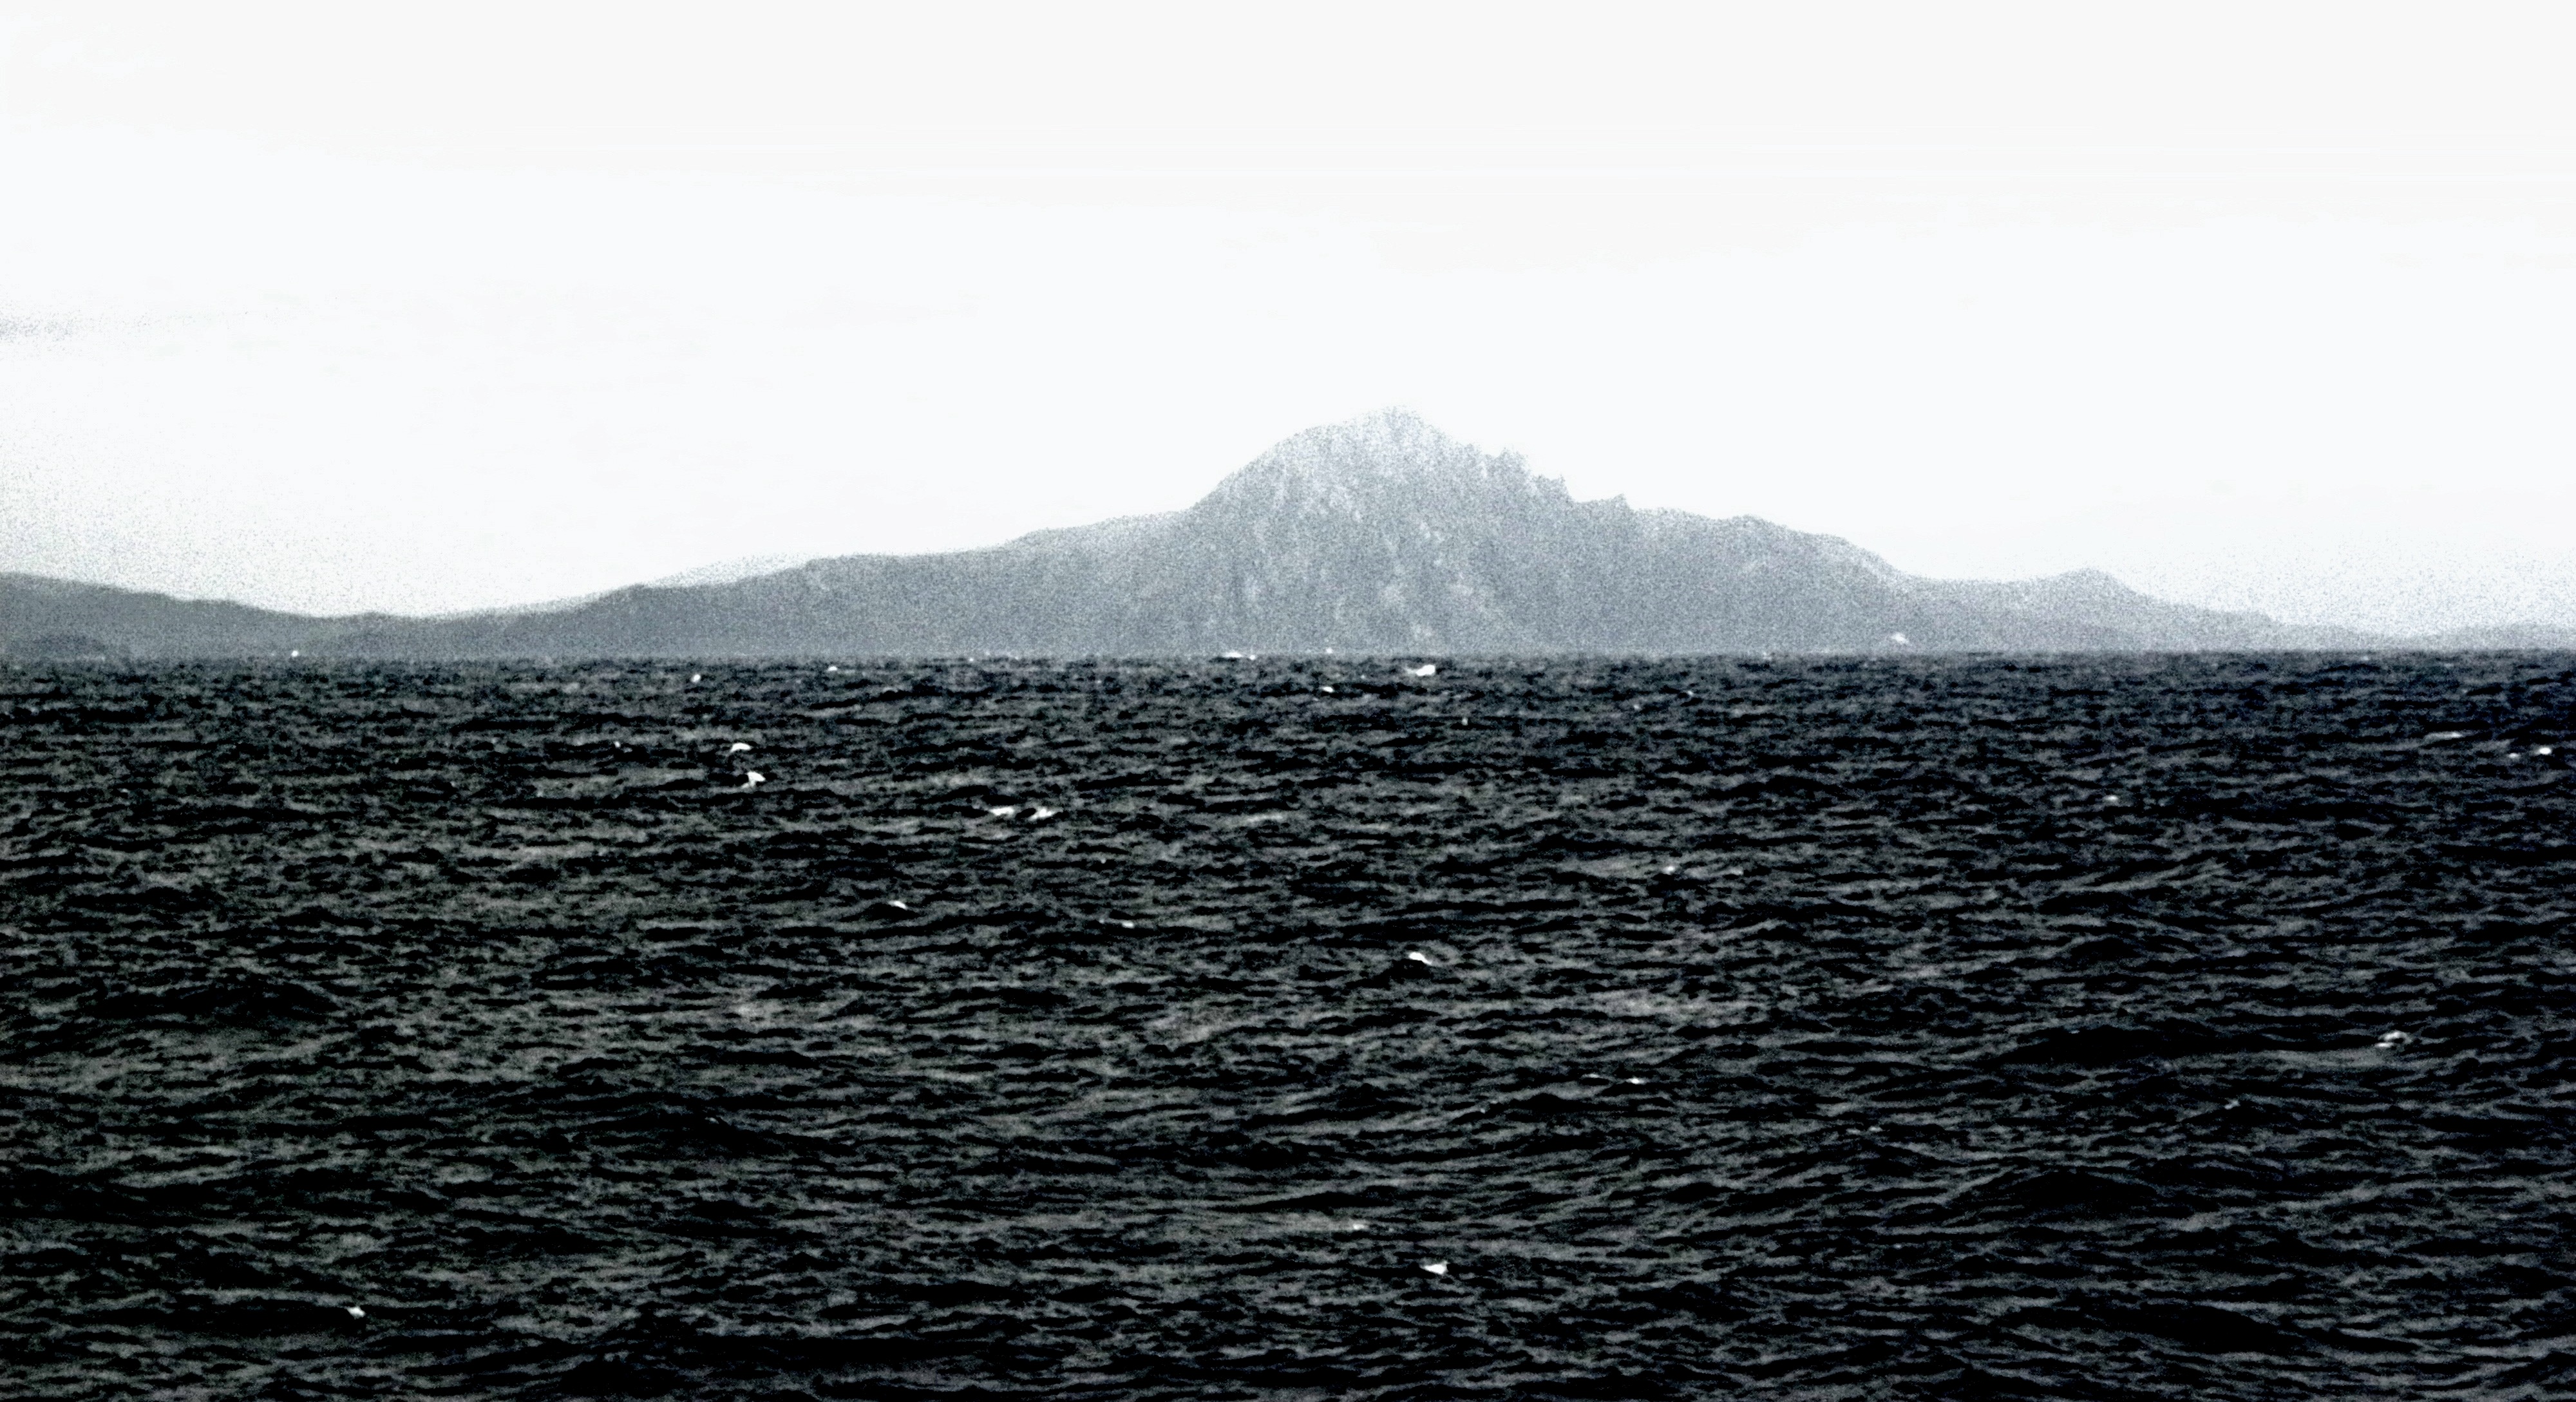 Cape Horn January 23, 2010. Photo by Chet Ogan